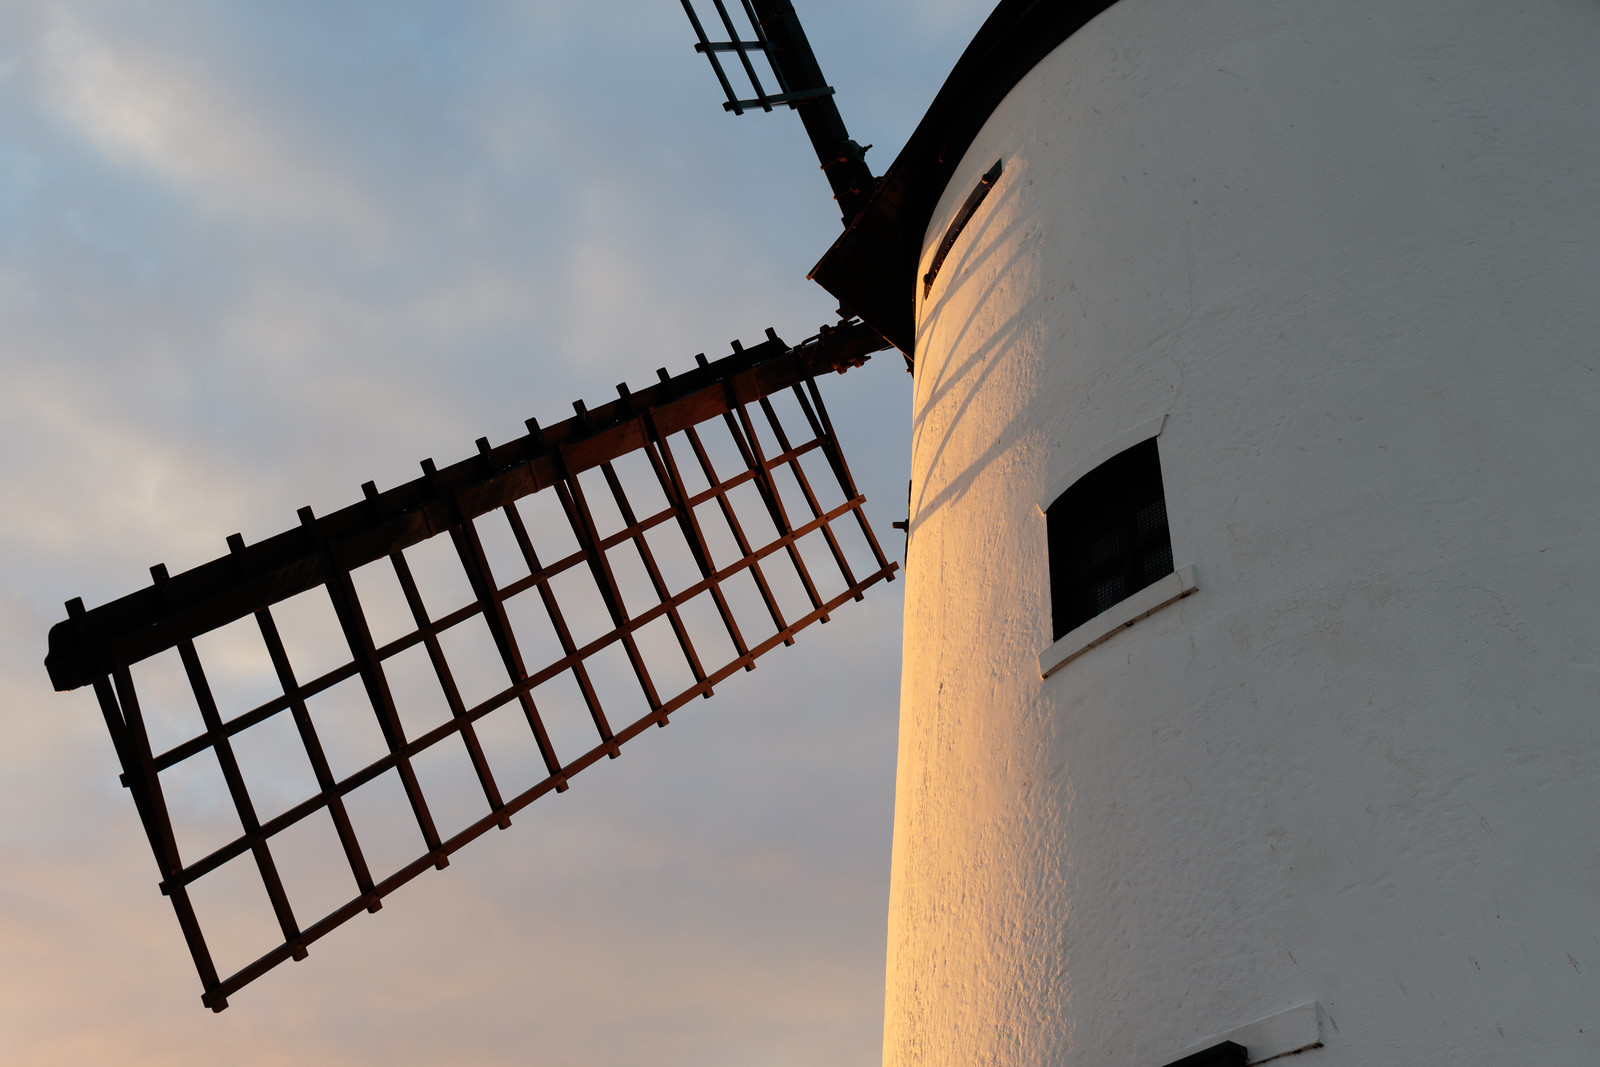 Lytham Windmill at sunset